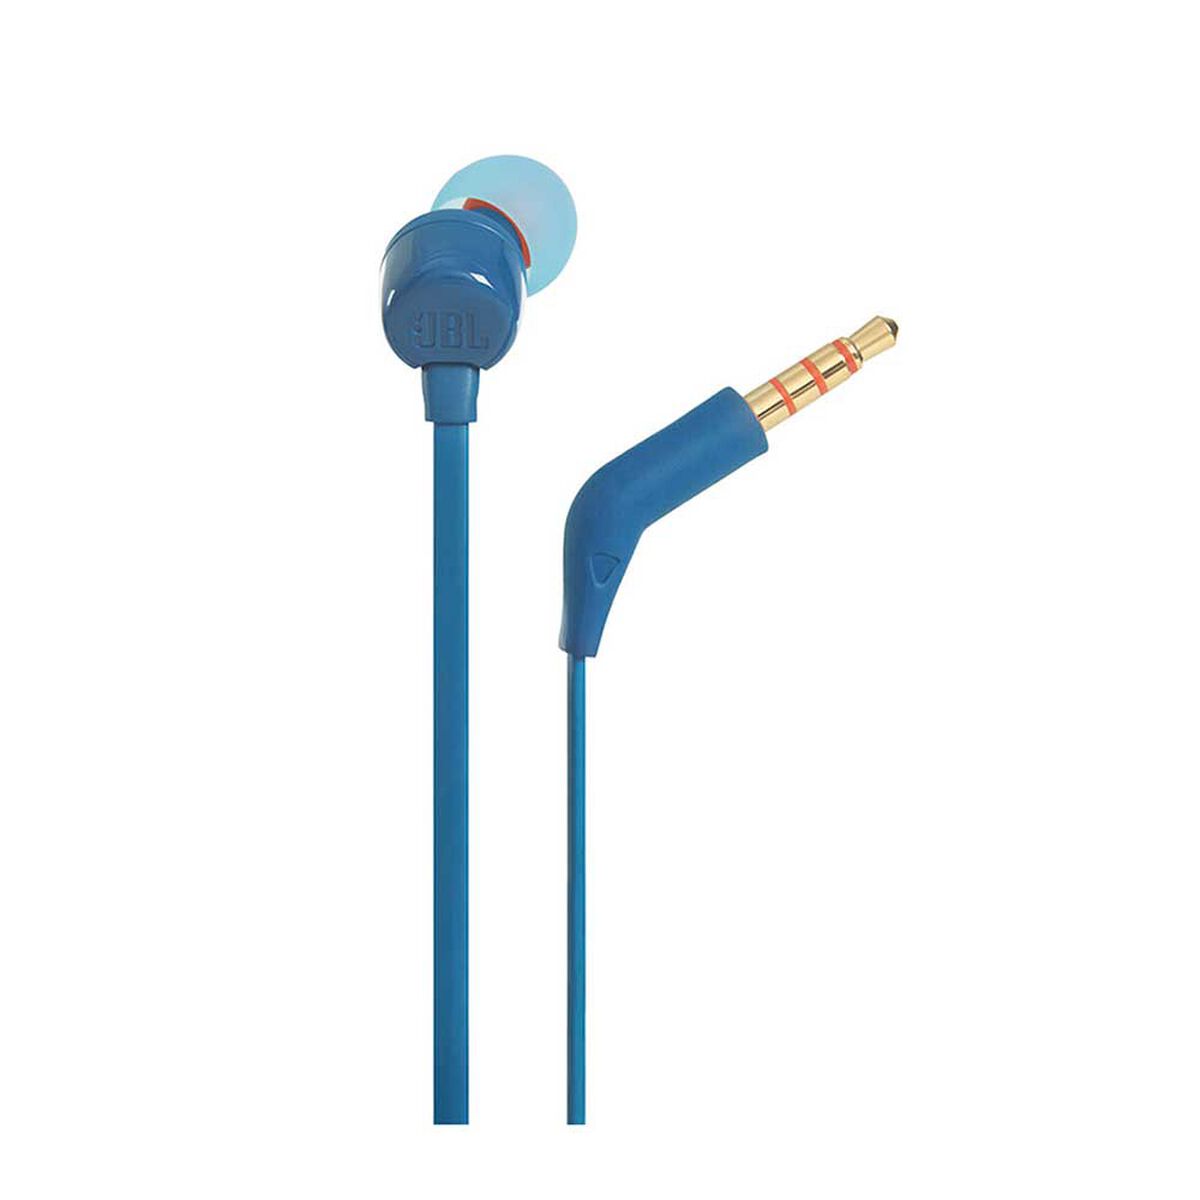 Audífonos In Ear JBL T110 Azules